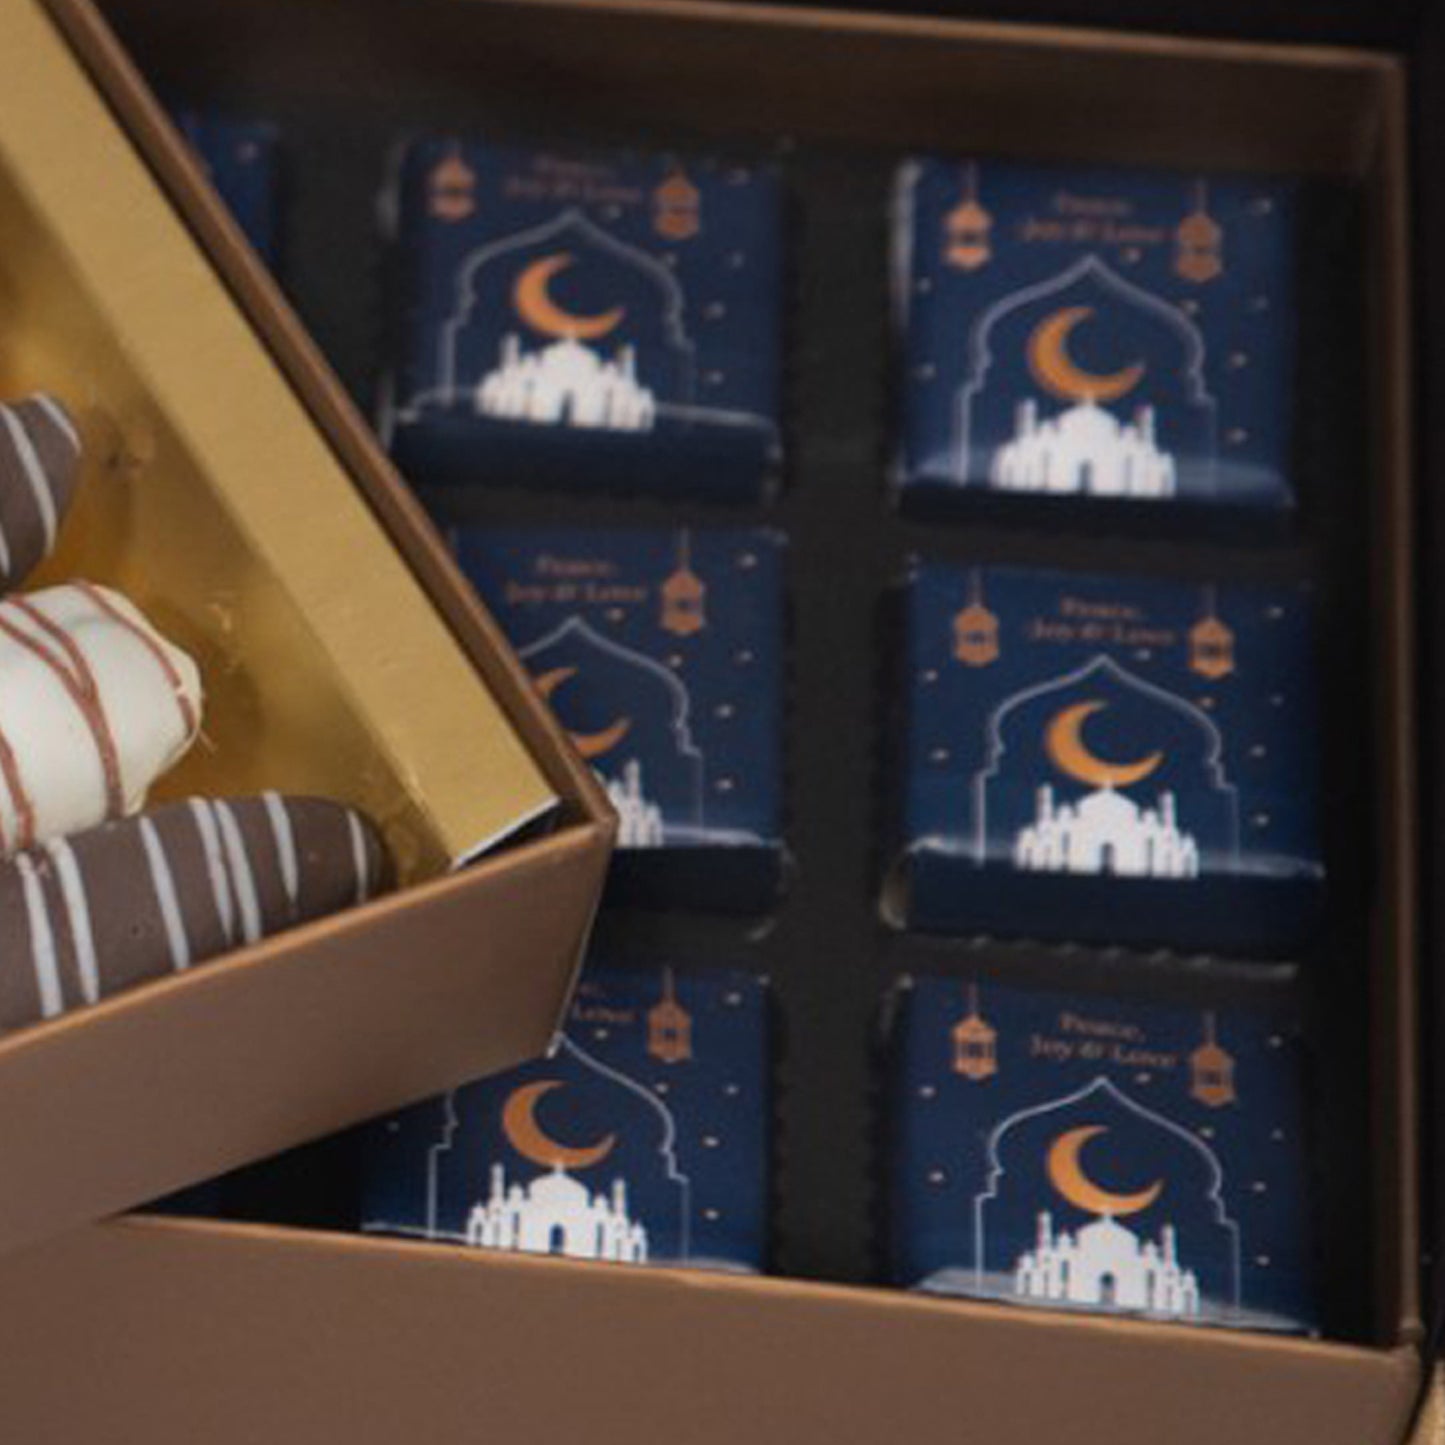 ZOROY Assorted Dry Fruit Filled Dates and  9 Eid Mubarak chocolates 280G in a Double decker box | Filled With Roasted Almonds, Roasted Hazelnut, Chocolate coated | Khajur dry fruit